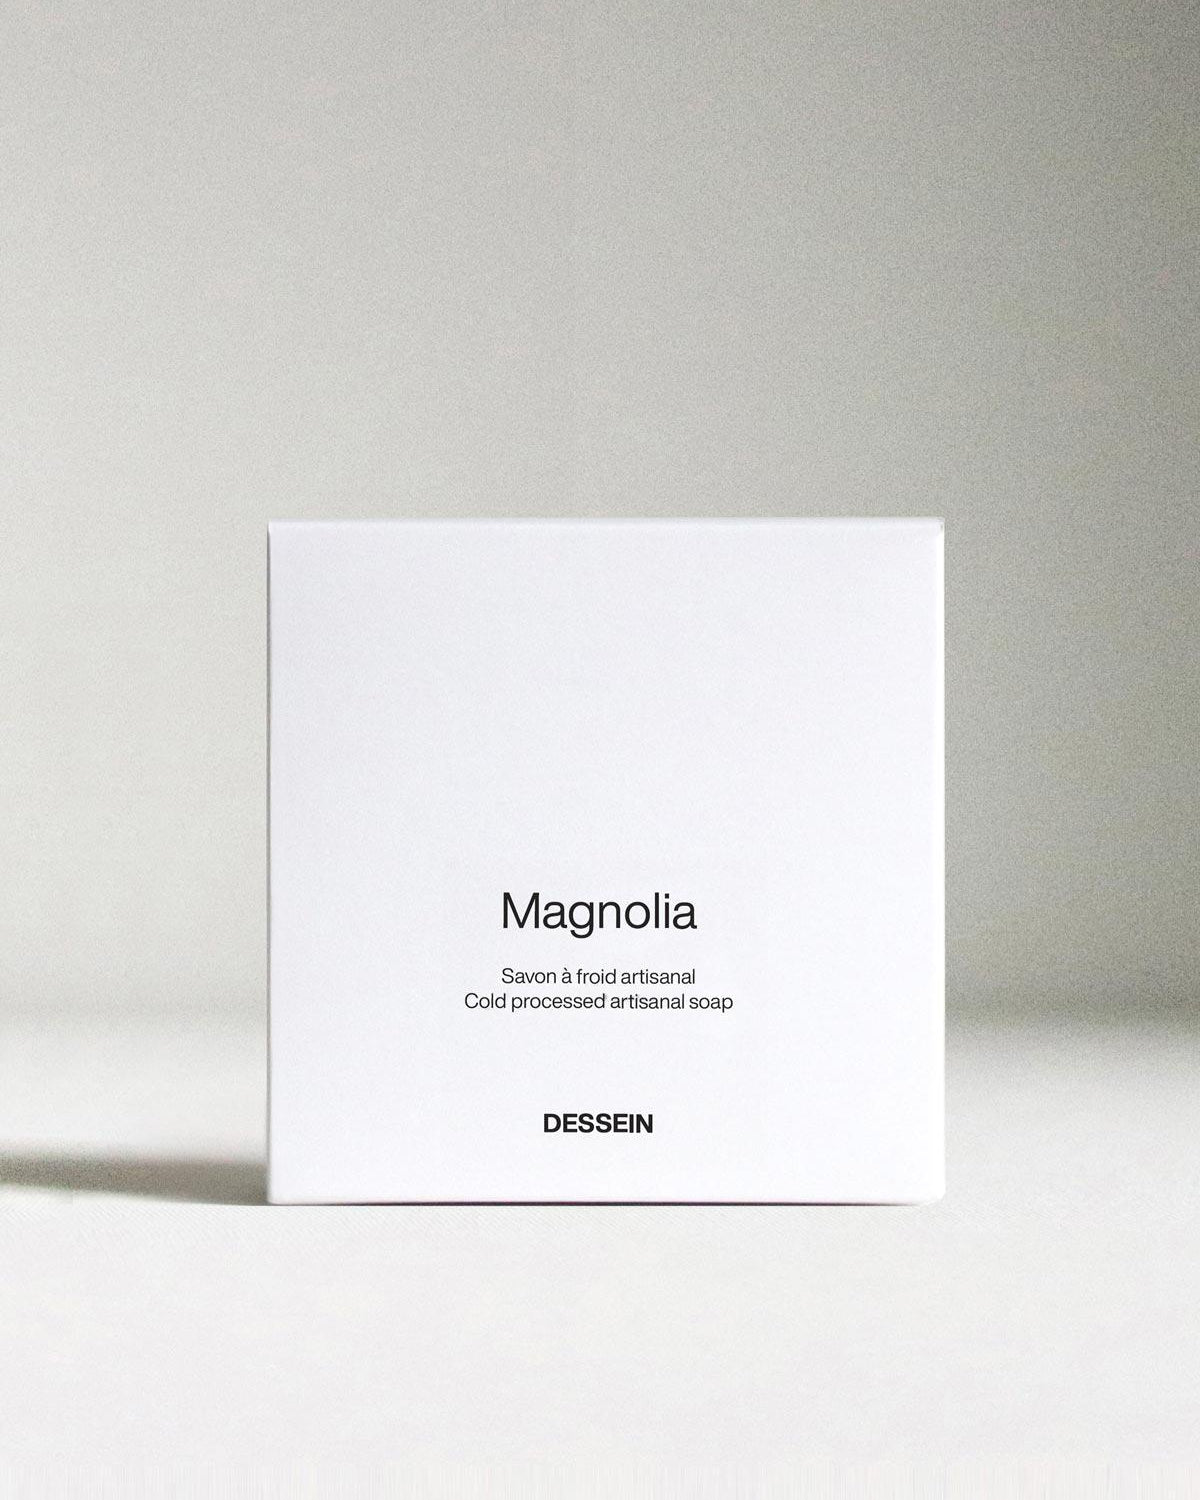 Magnolia - Beauty - Dessein - Elevastor